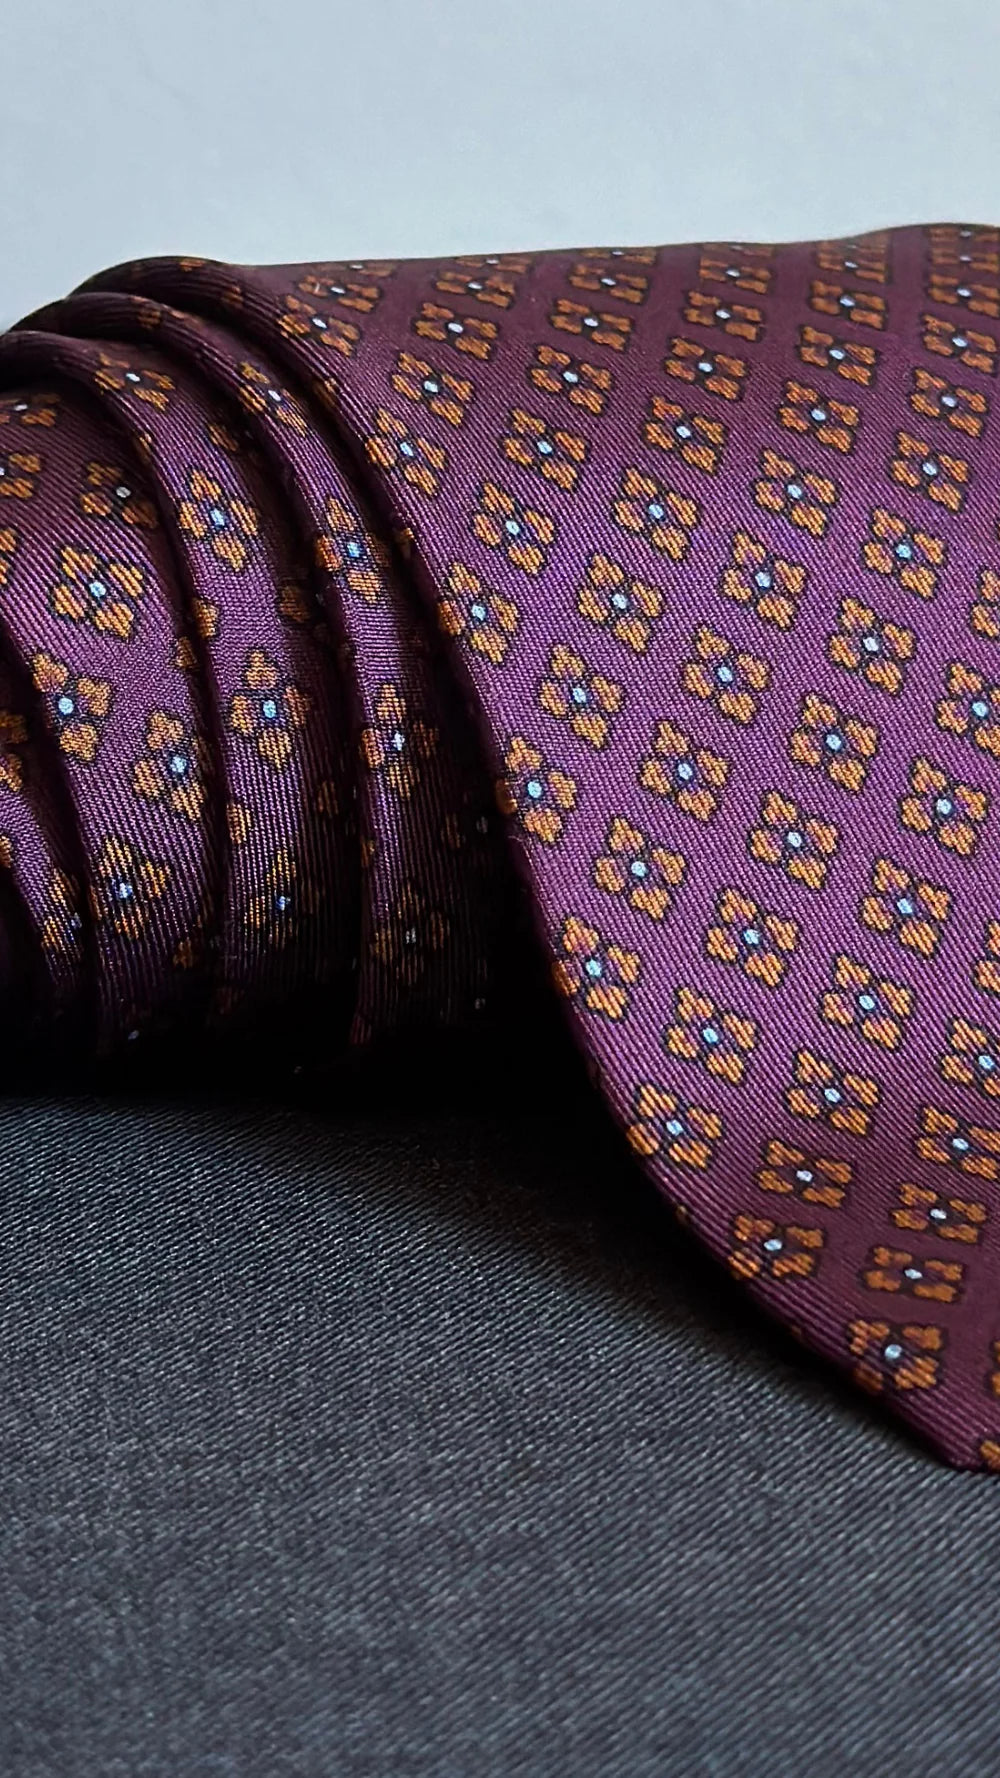 Corbata Emblematic berenjena geométricos